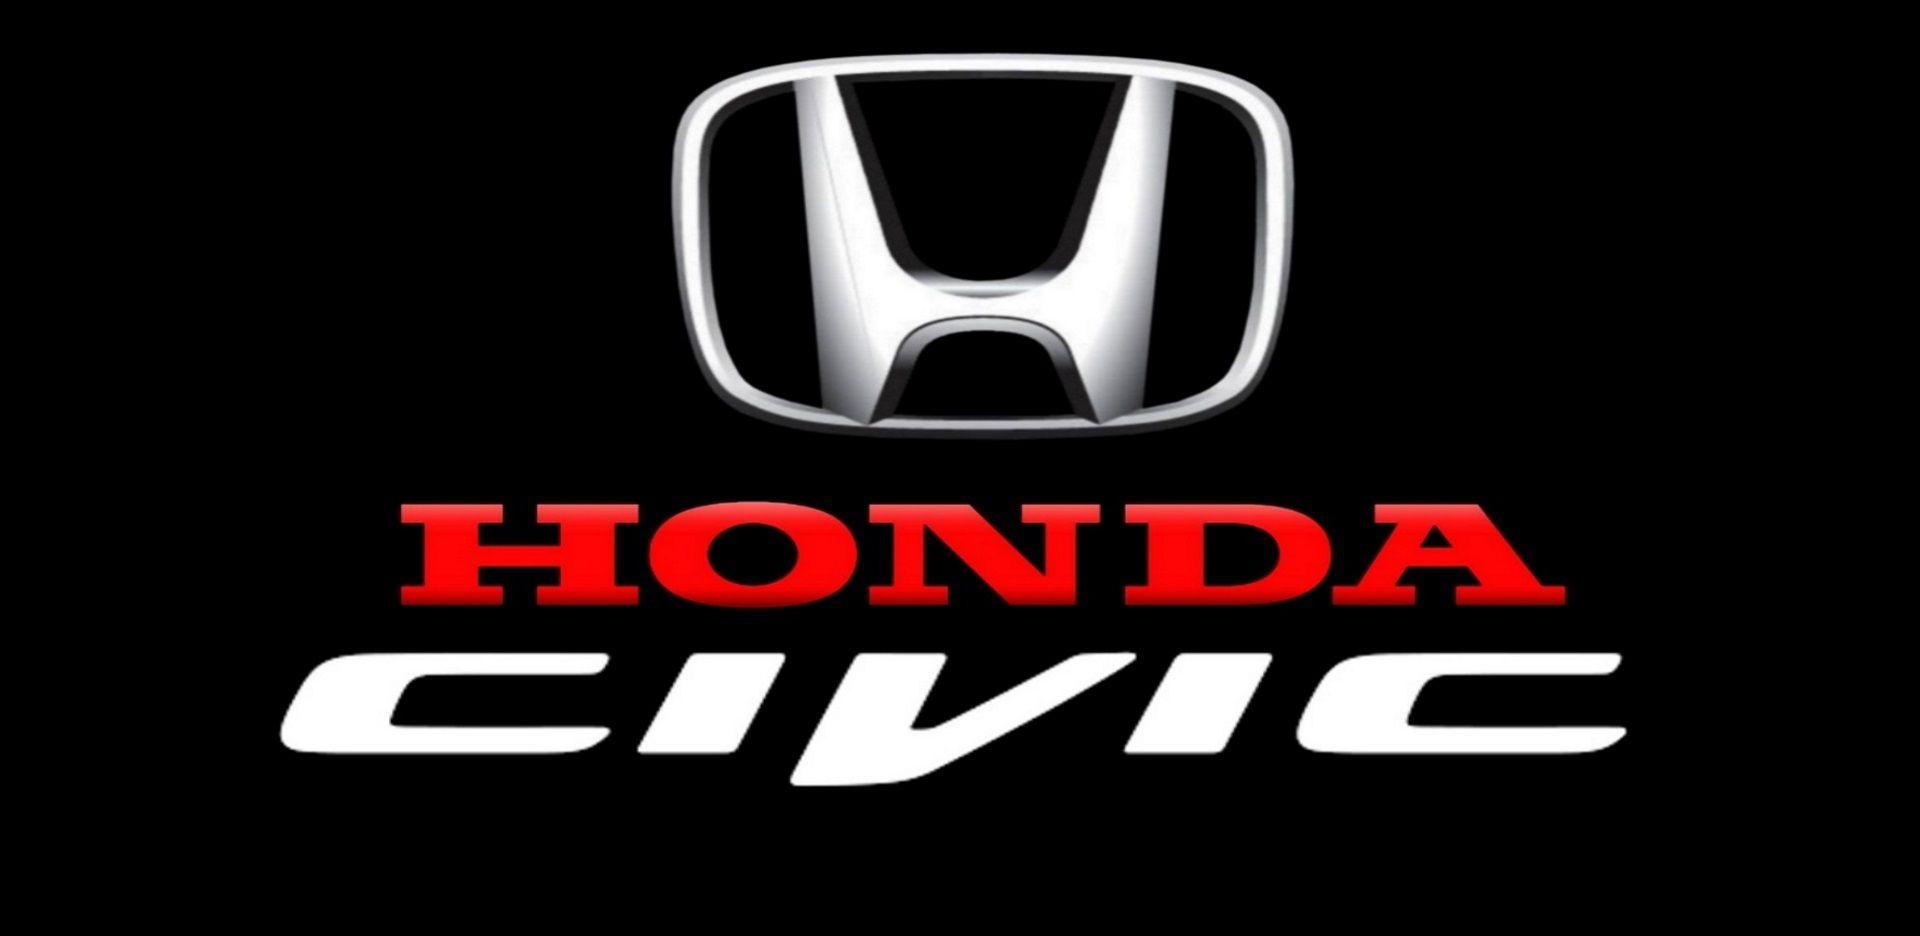 Honda Civic HD Logo - Honda Civic Logo Wallpaper